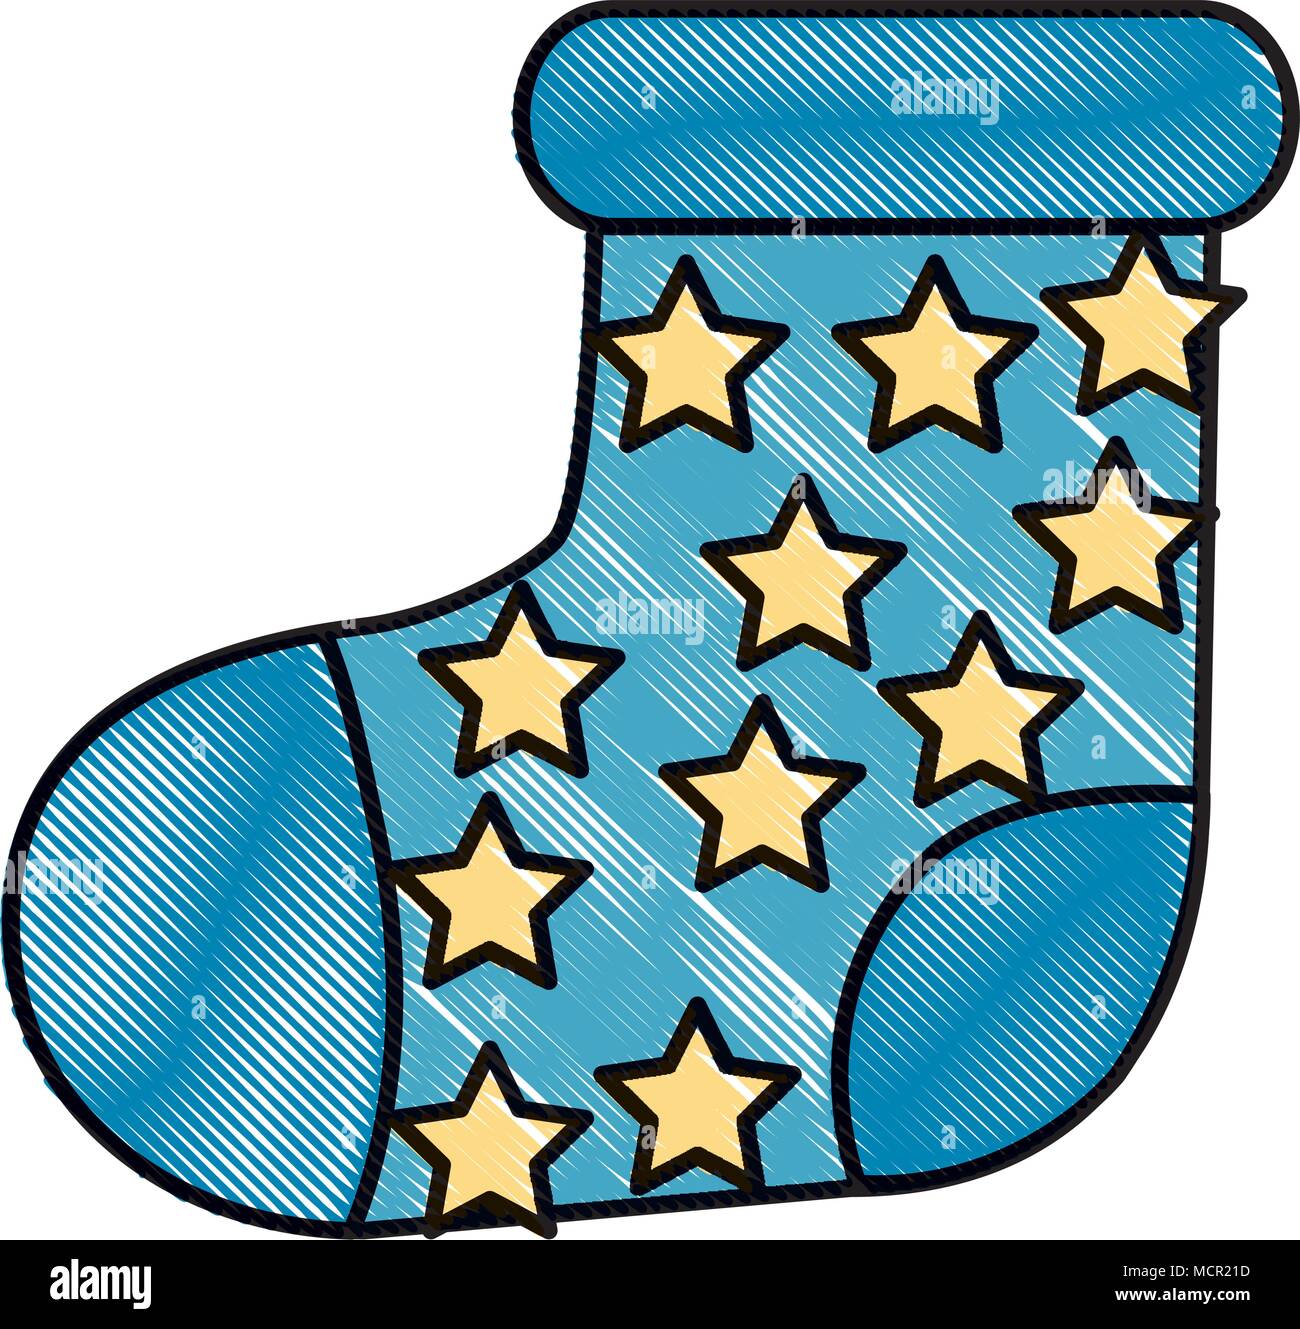 Premium Vector  Blue baby socks